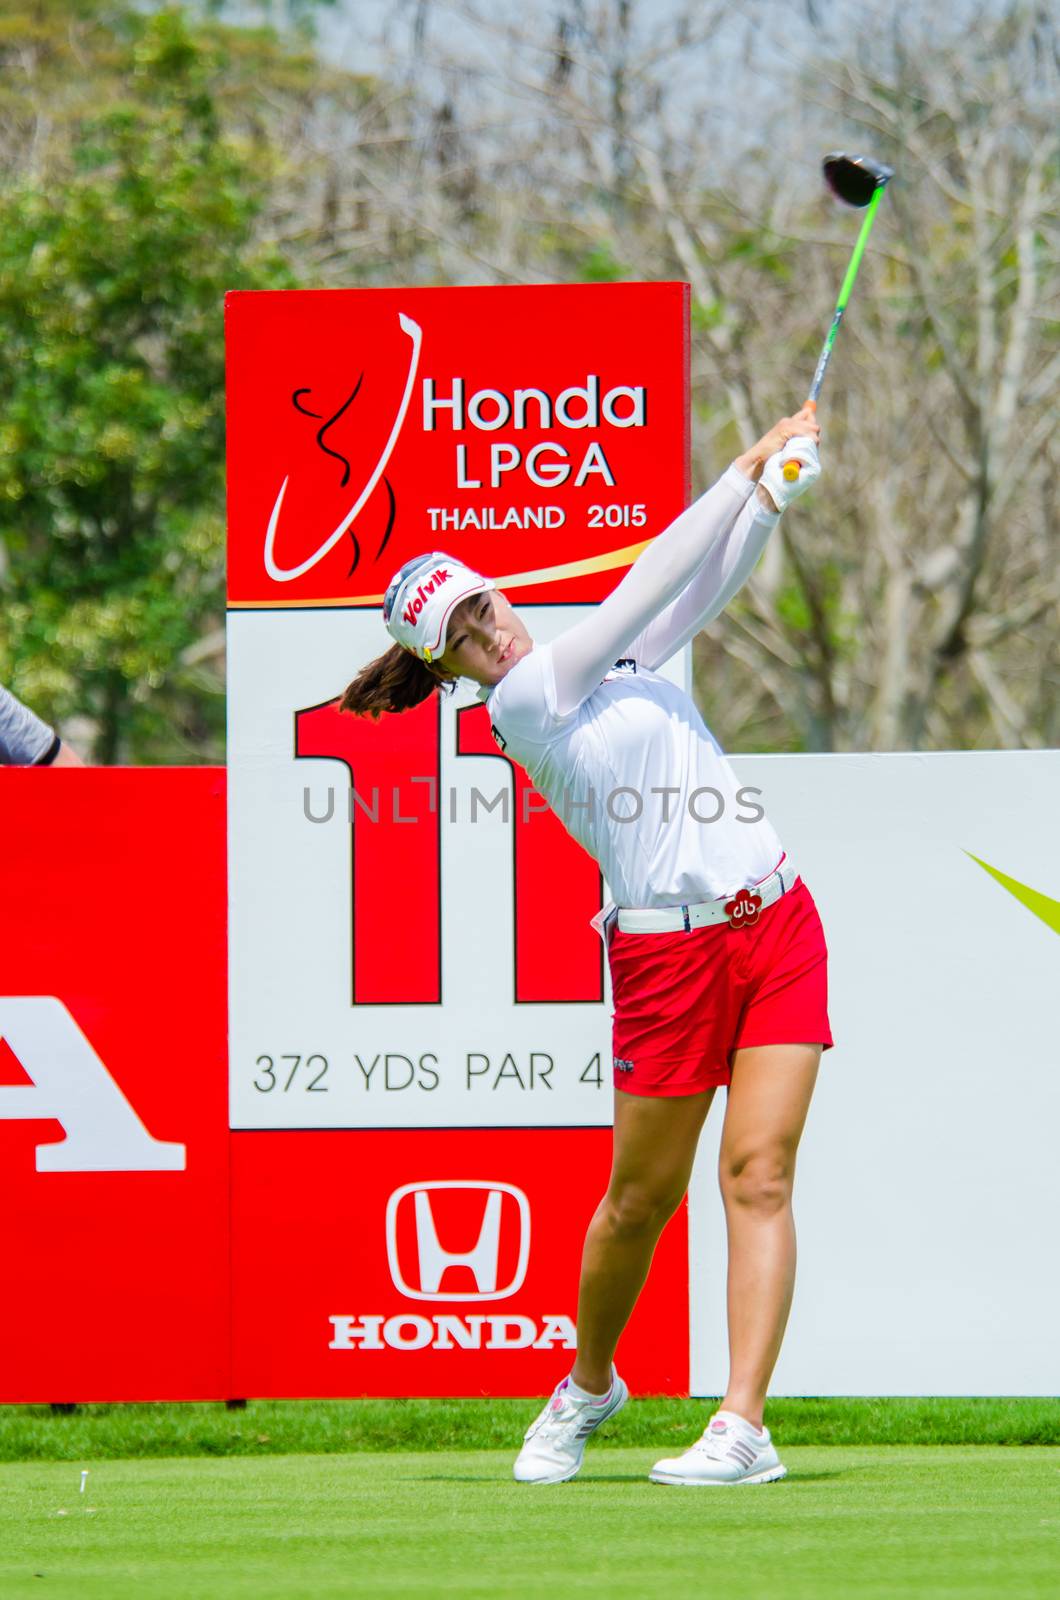 CHONBURI - FEBRUARY 28: Chella Choi of South Korea in Honda LPGA Thailand 2015 at Siam Country Club, Pattaya Old Course on February 28, 2015 in Chonburi, Thailand.